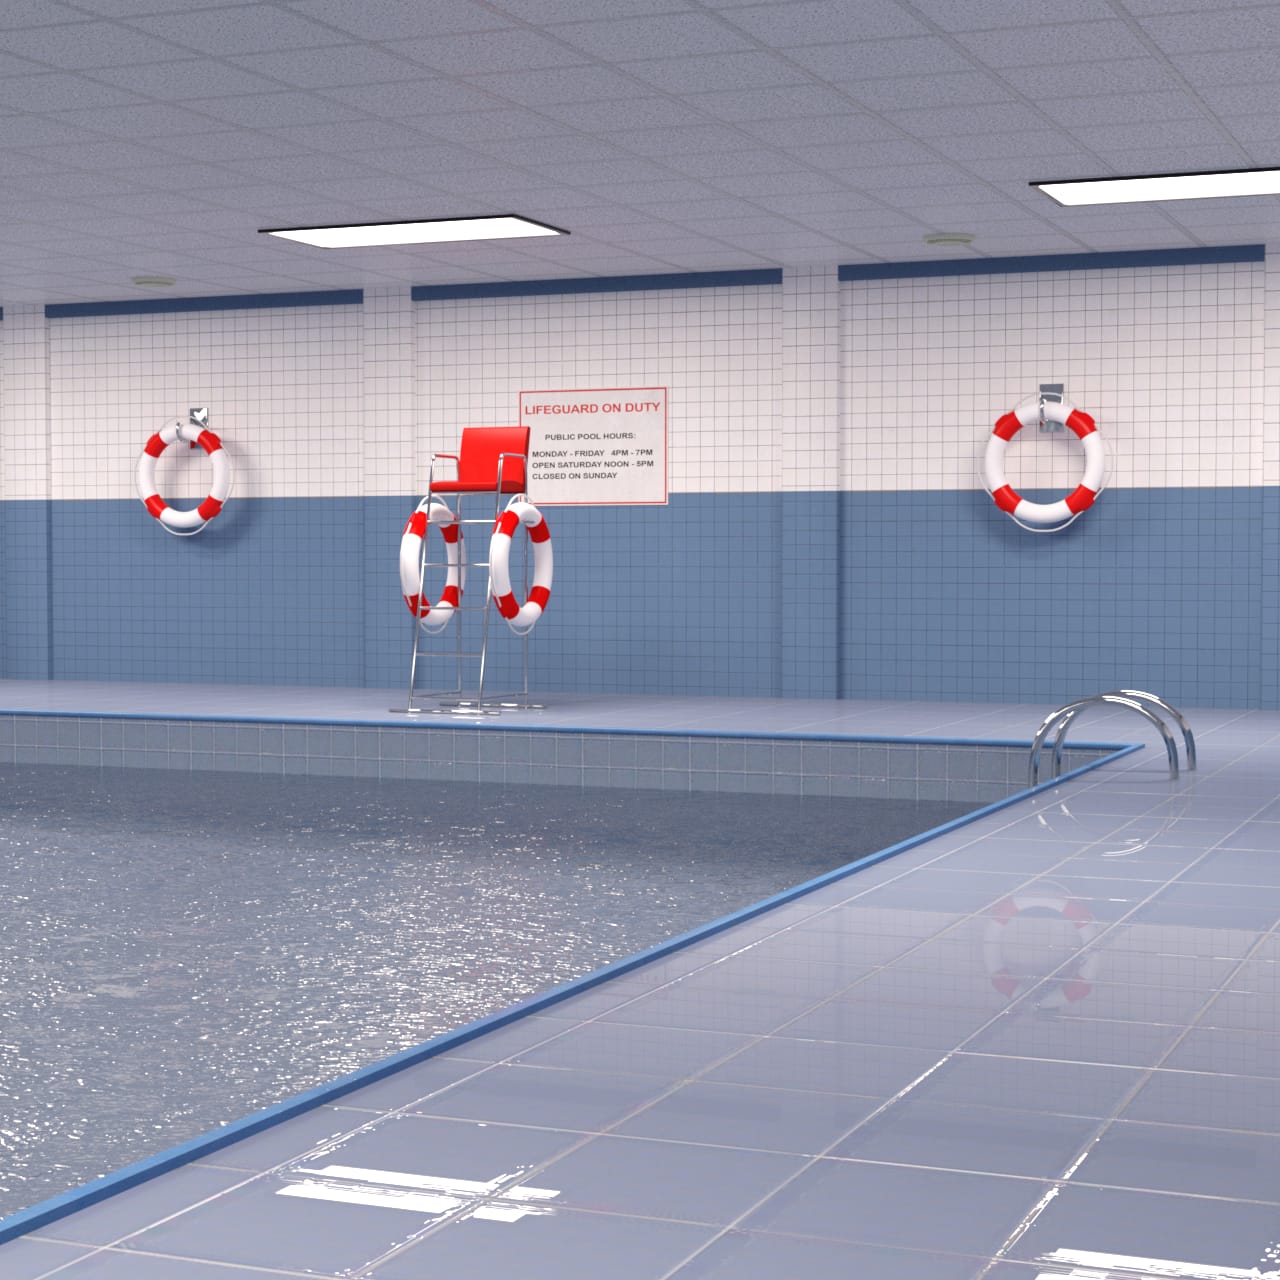 Alternative camera perspective of the public indoor pool 3d model